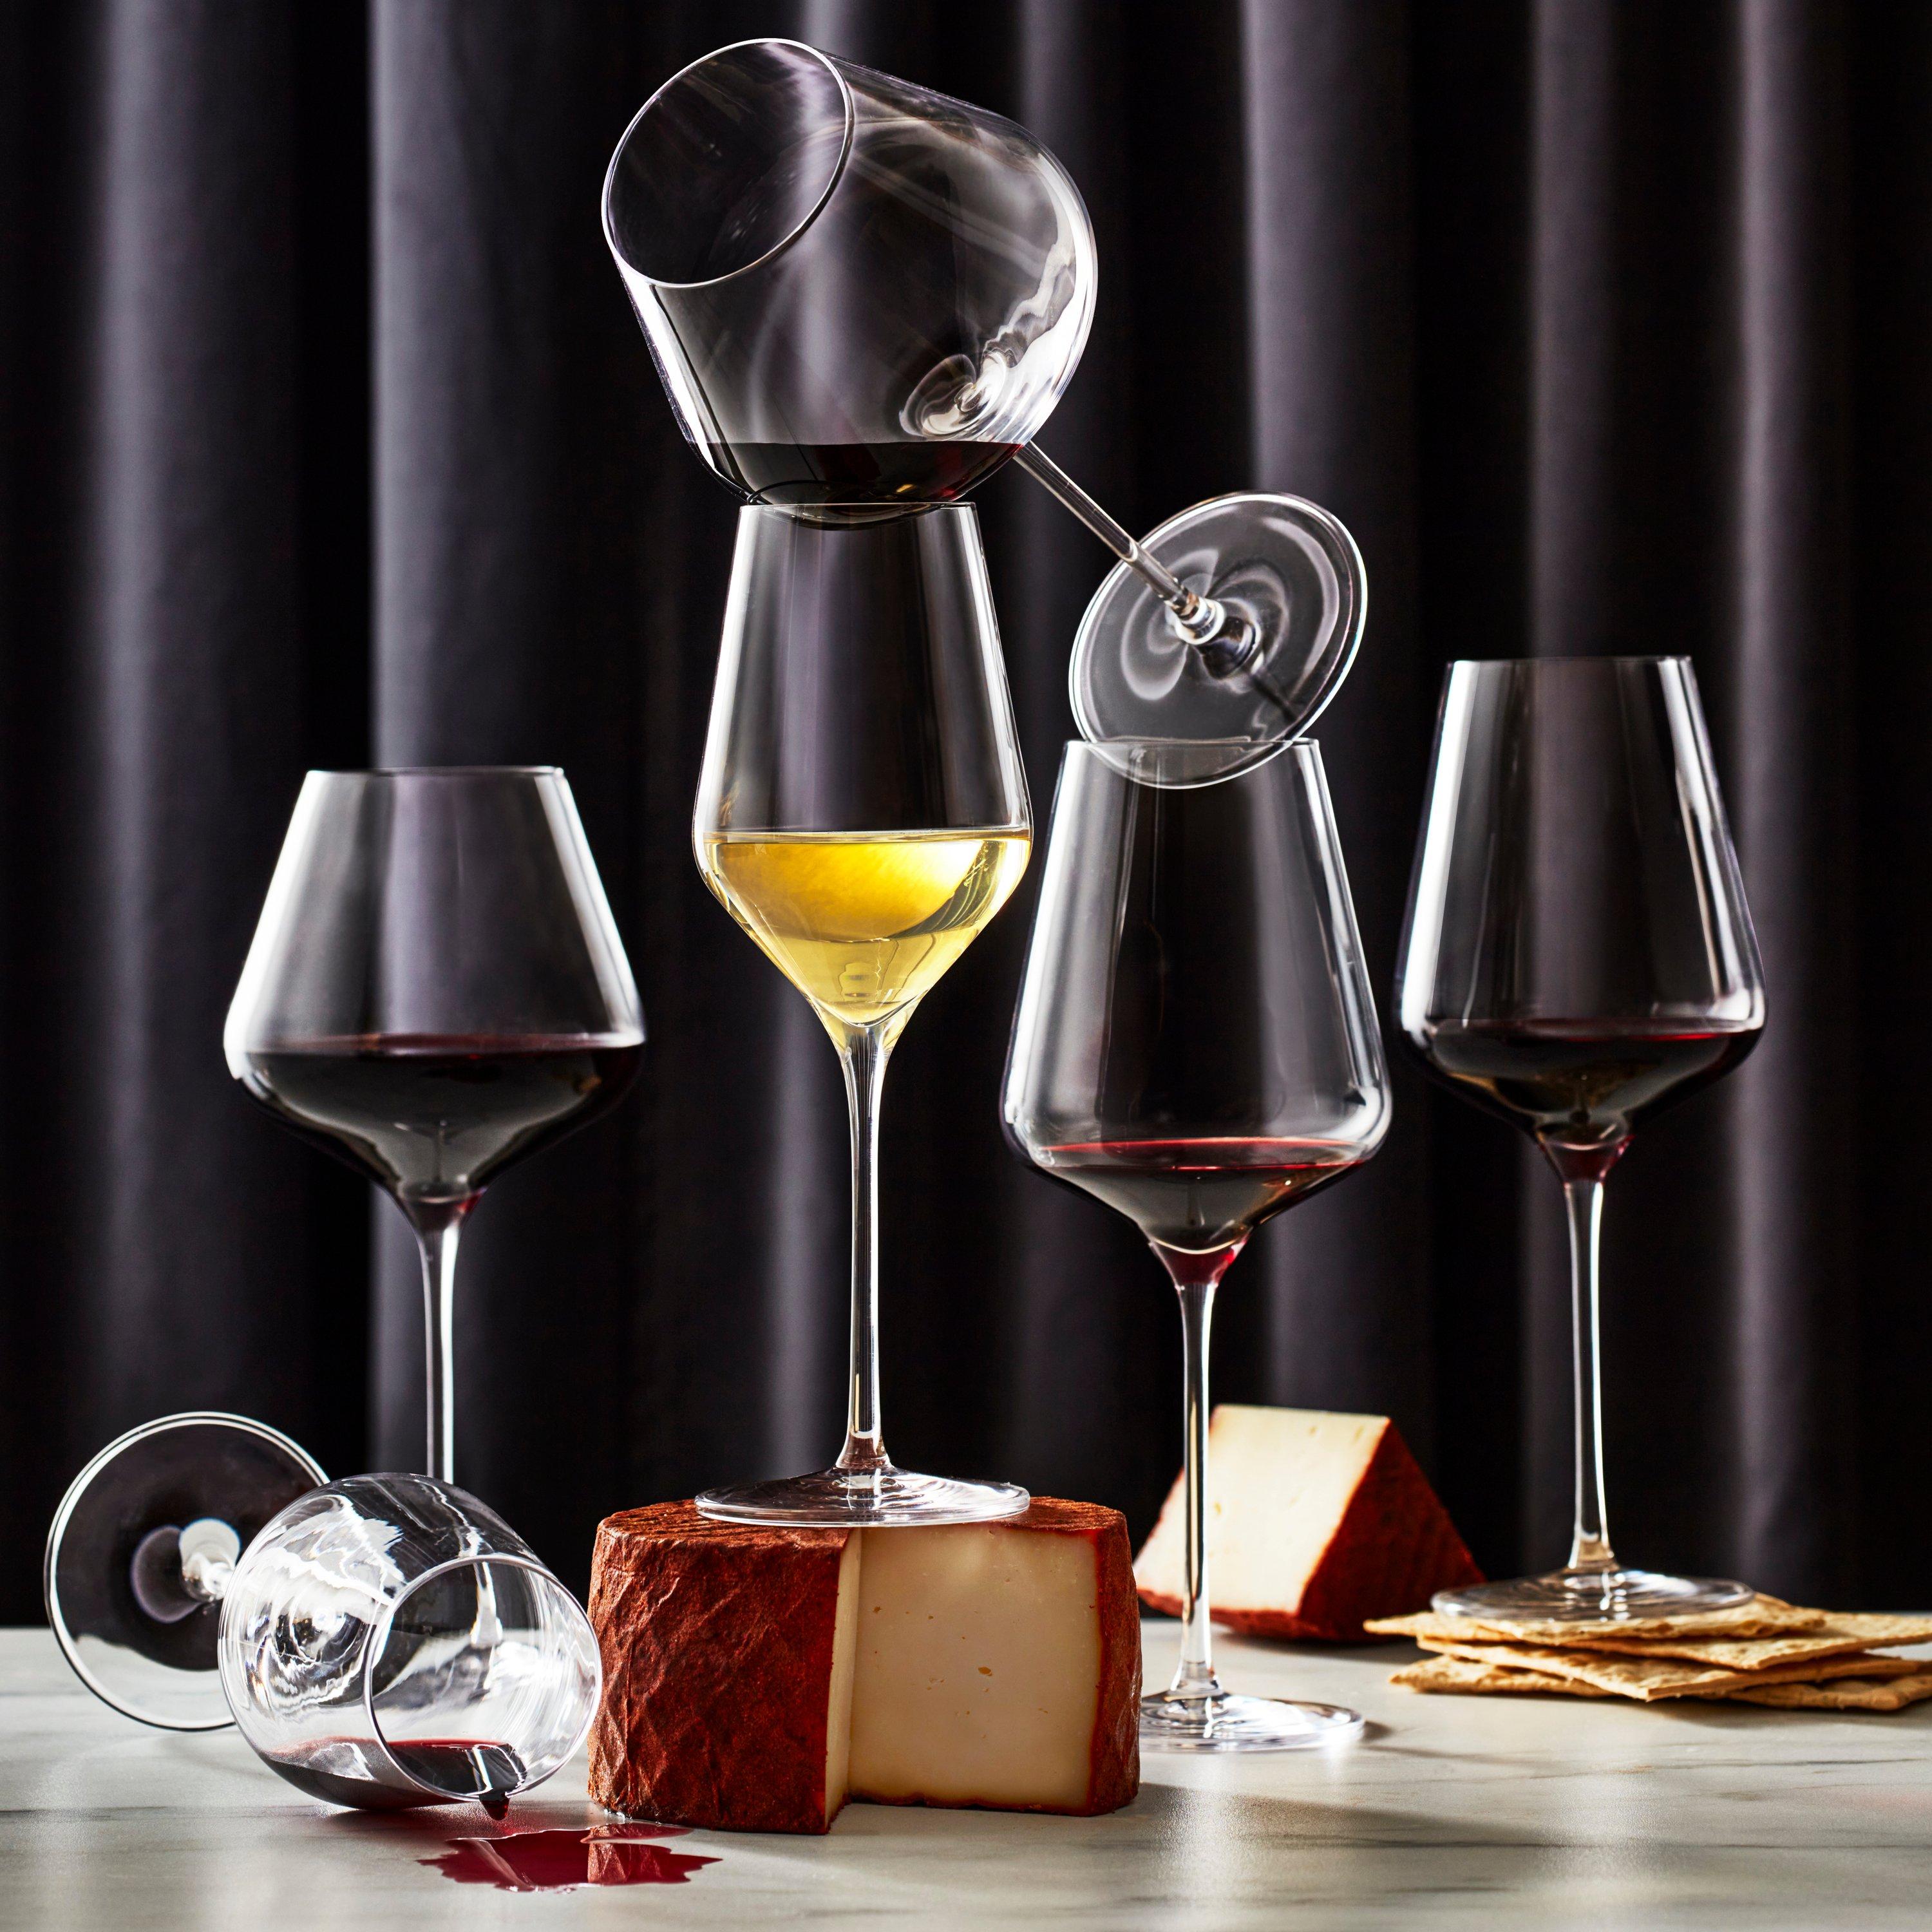 Types of Wine Glasses - Wine Enthusiast